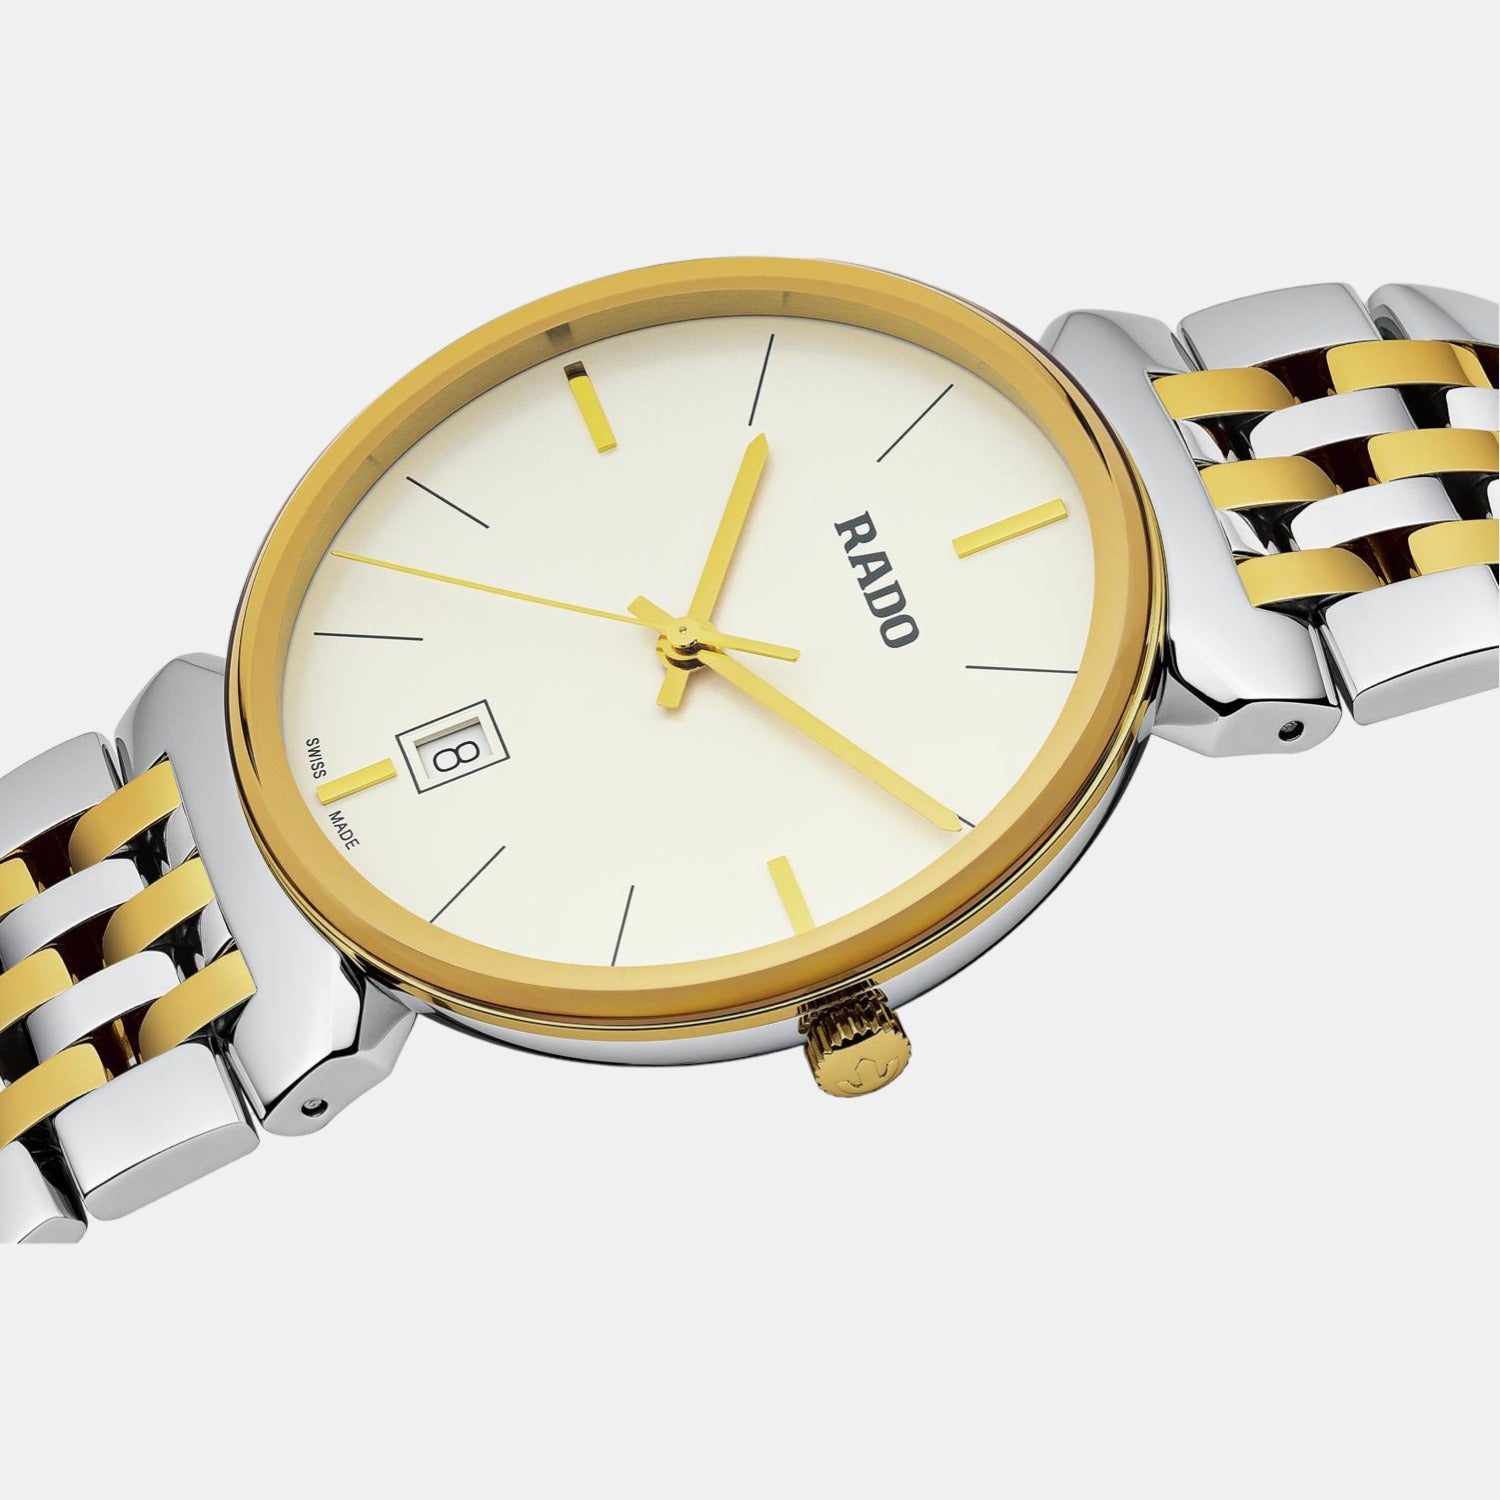 rado-stainless-steel-white-analog-unisex-watch-r48912023